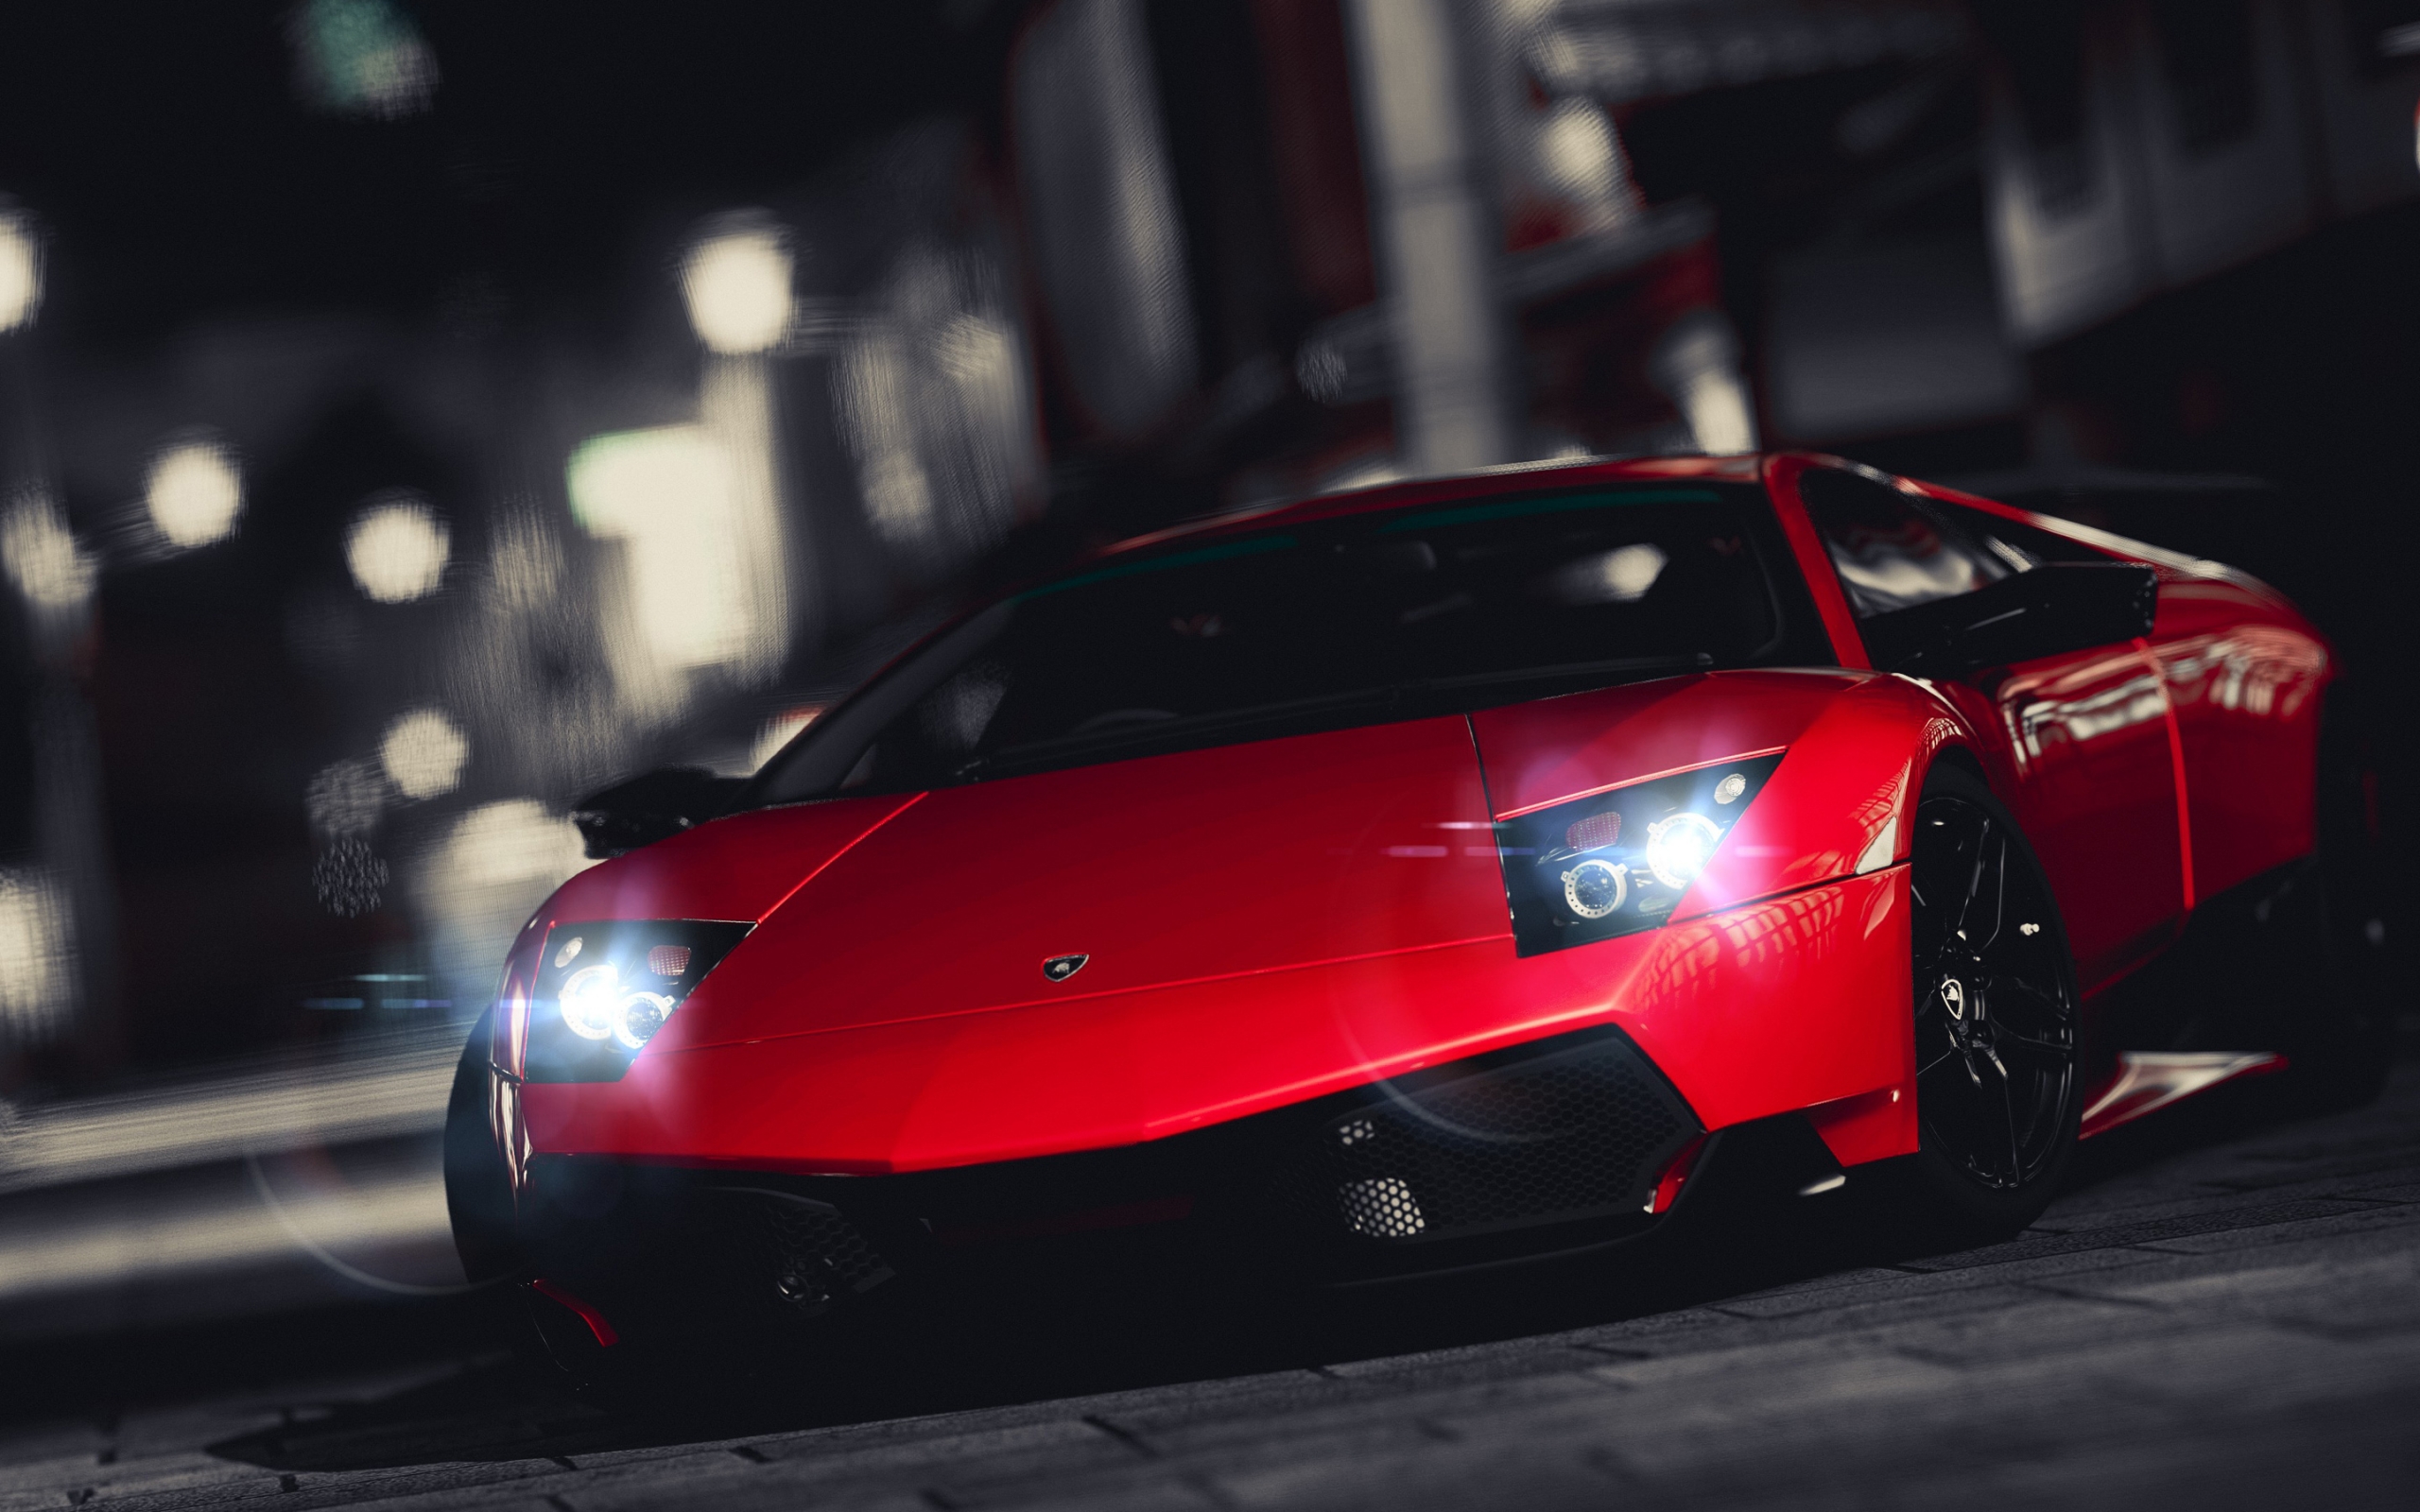 Lamborghini Murcielago красная